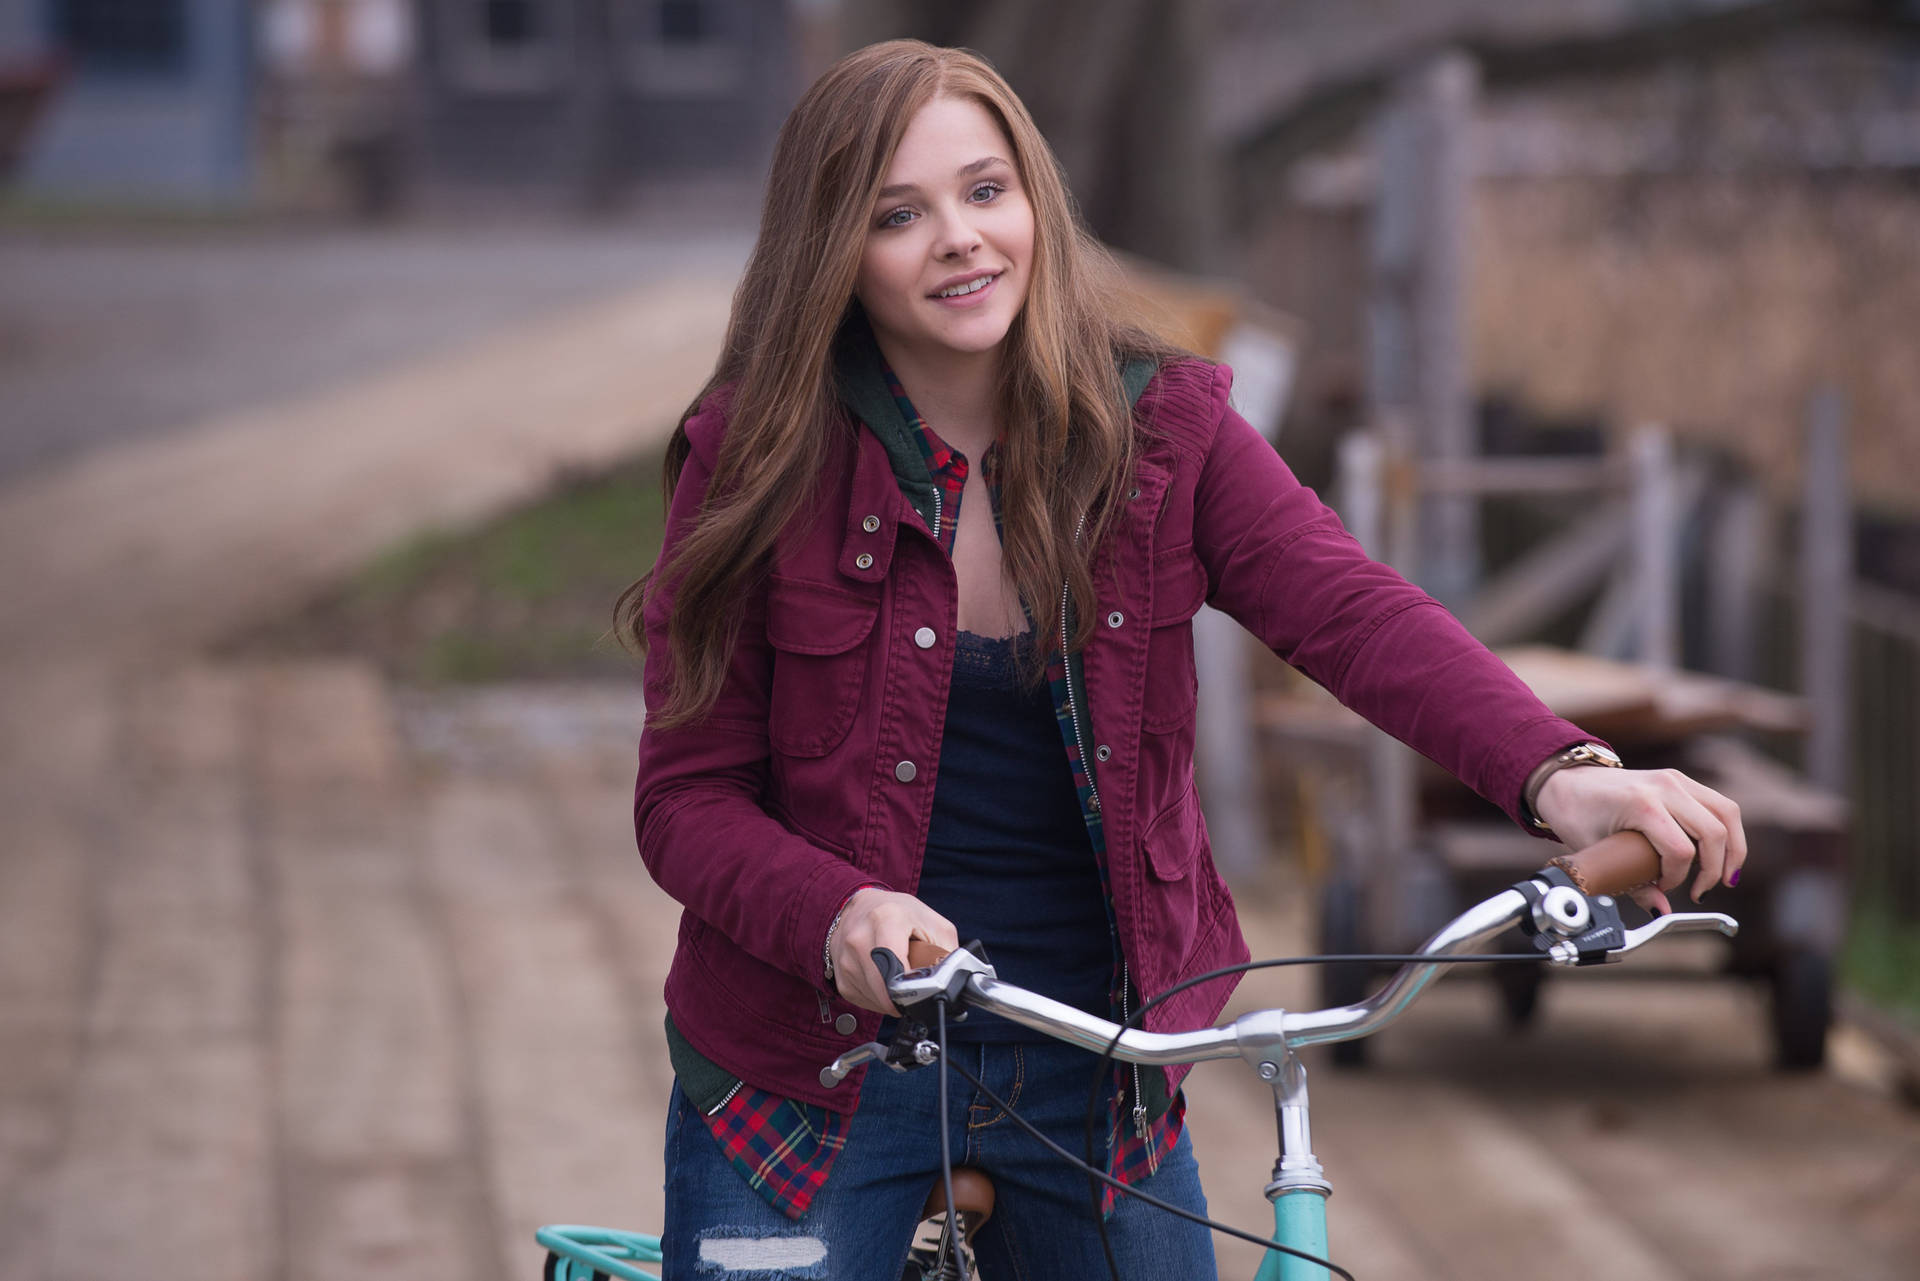 Chloë Grace Moretz Riding A Bike Background